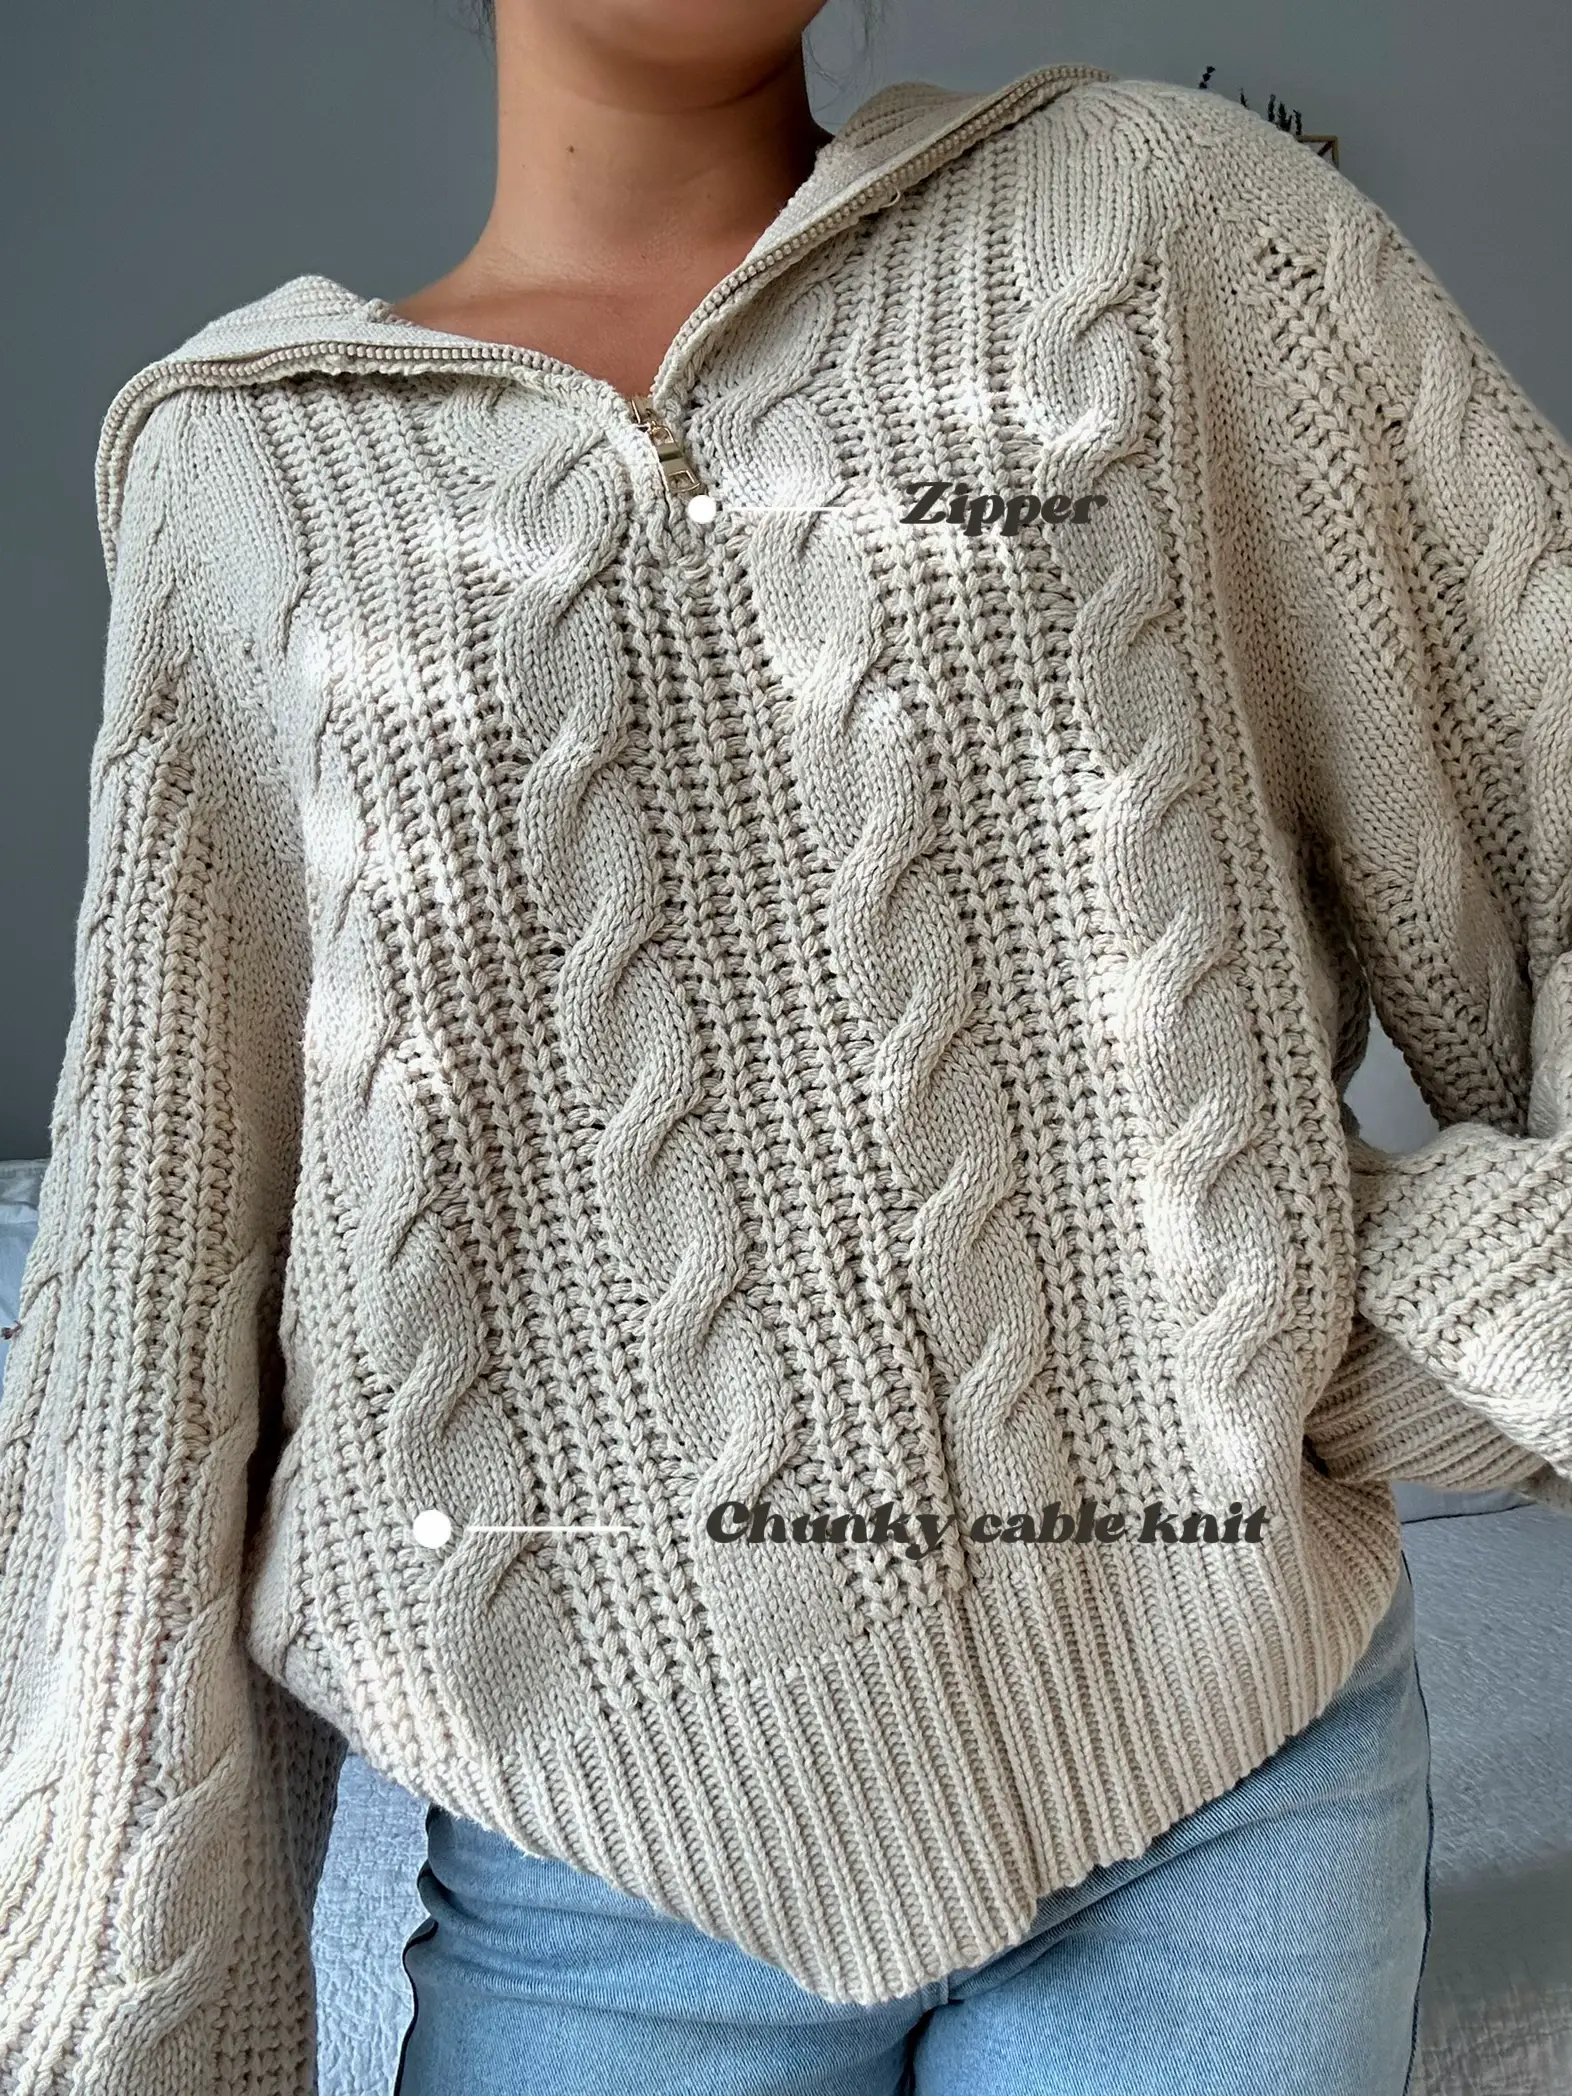 Knit Ariana Grande's Giant Sweater – Knitting